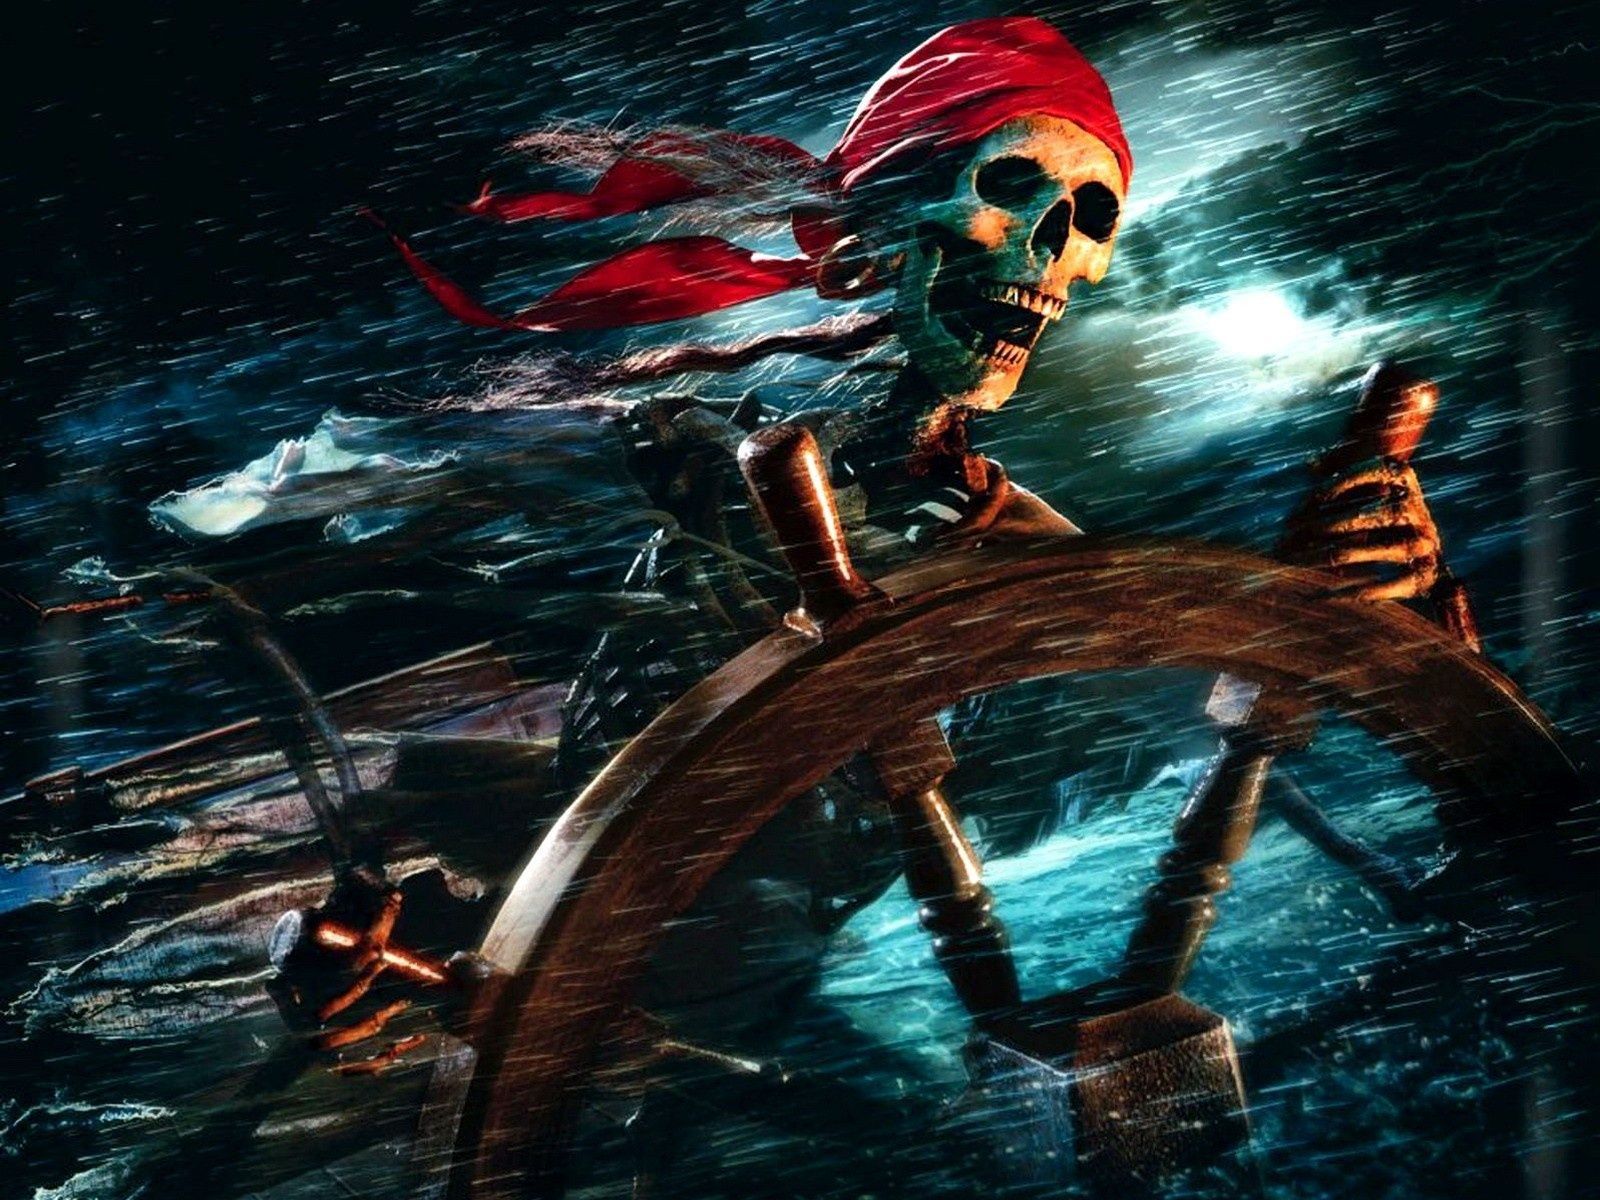 Free Download HD Pirate Skull Wallpapers for Desktop